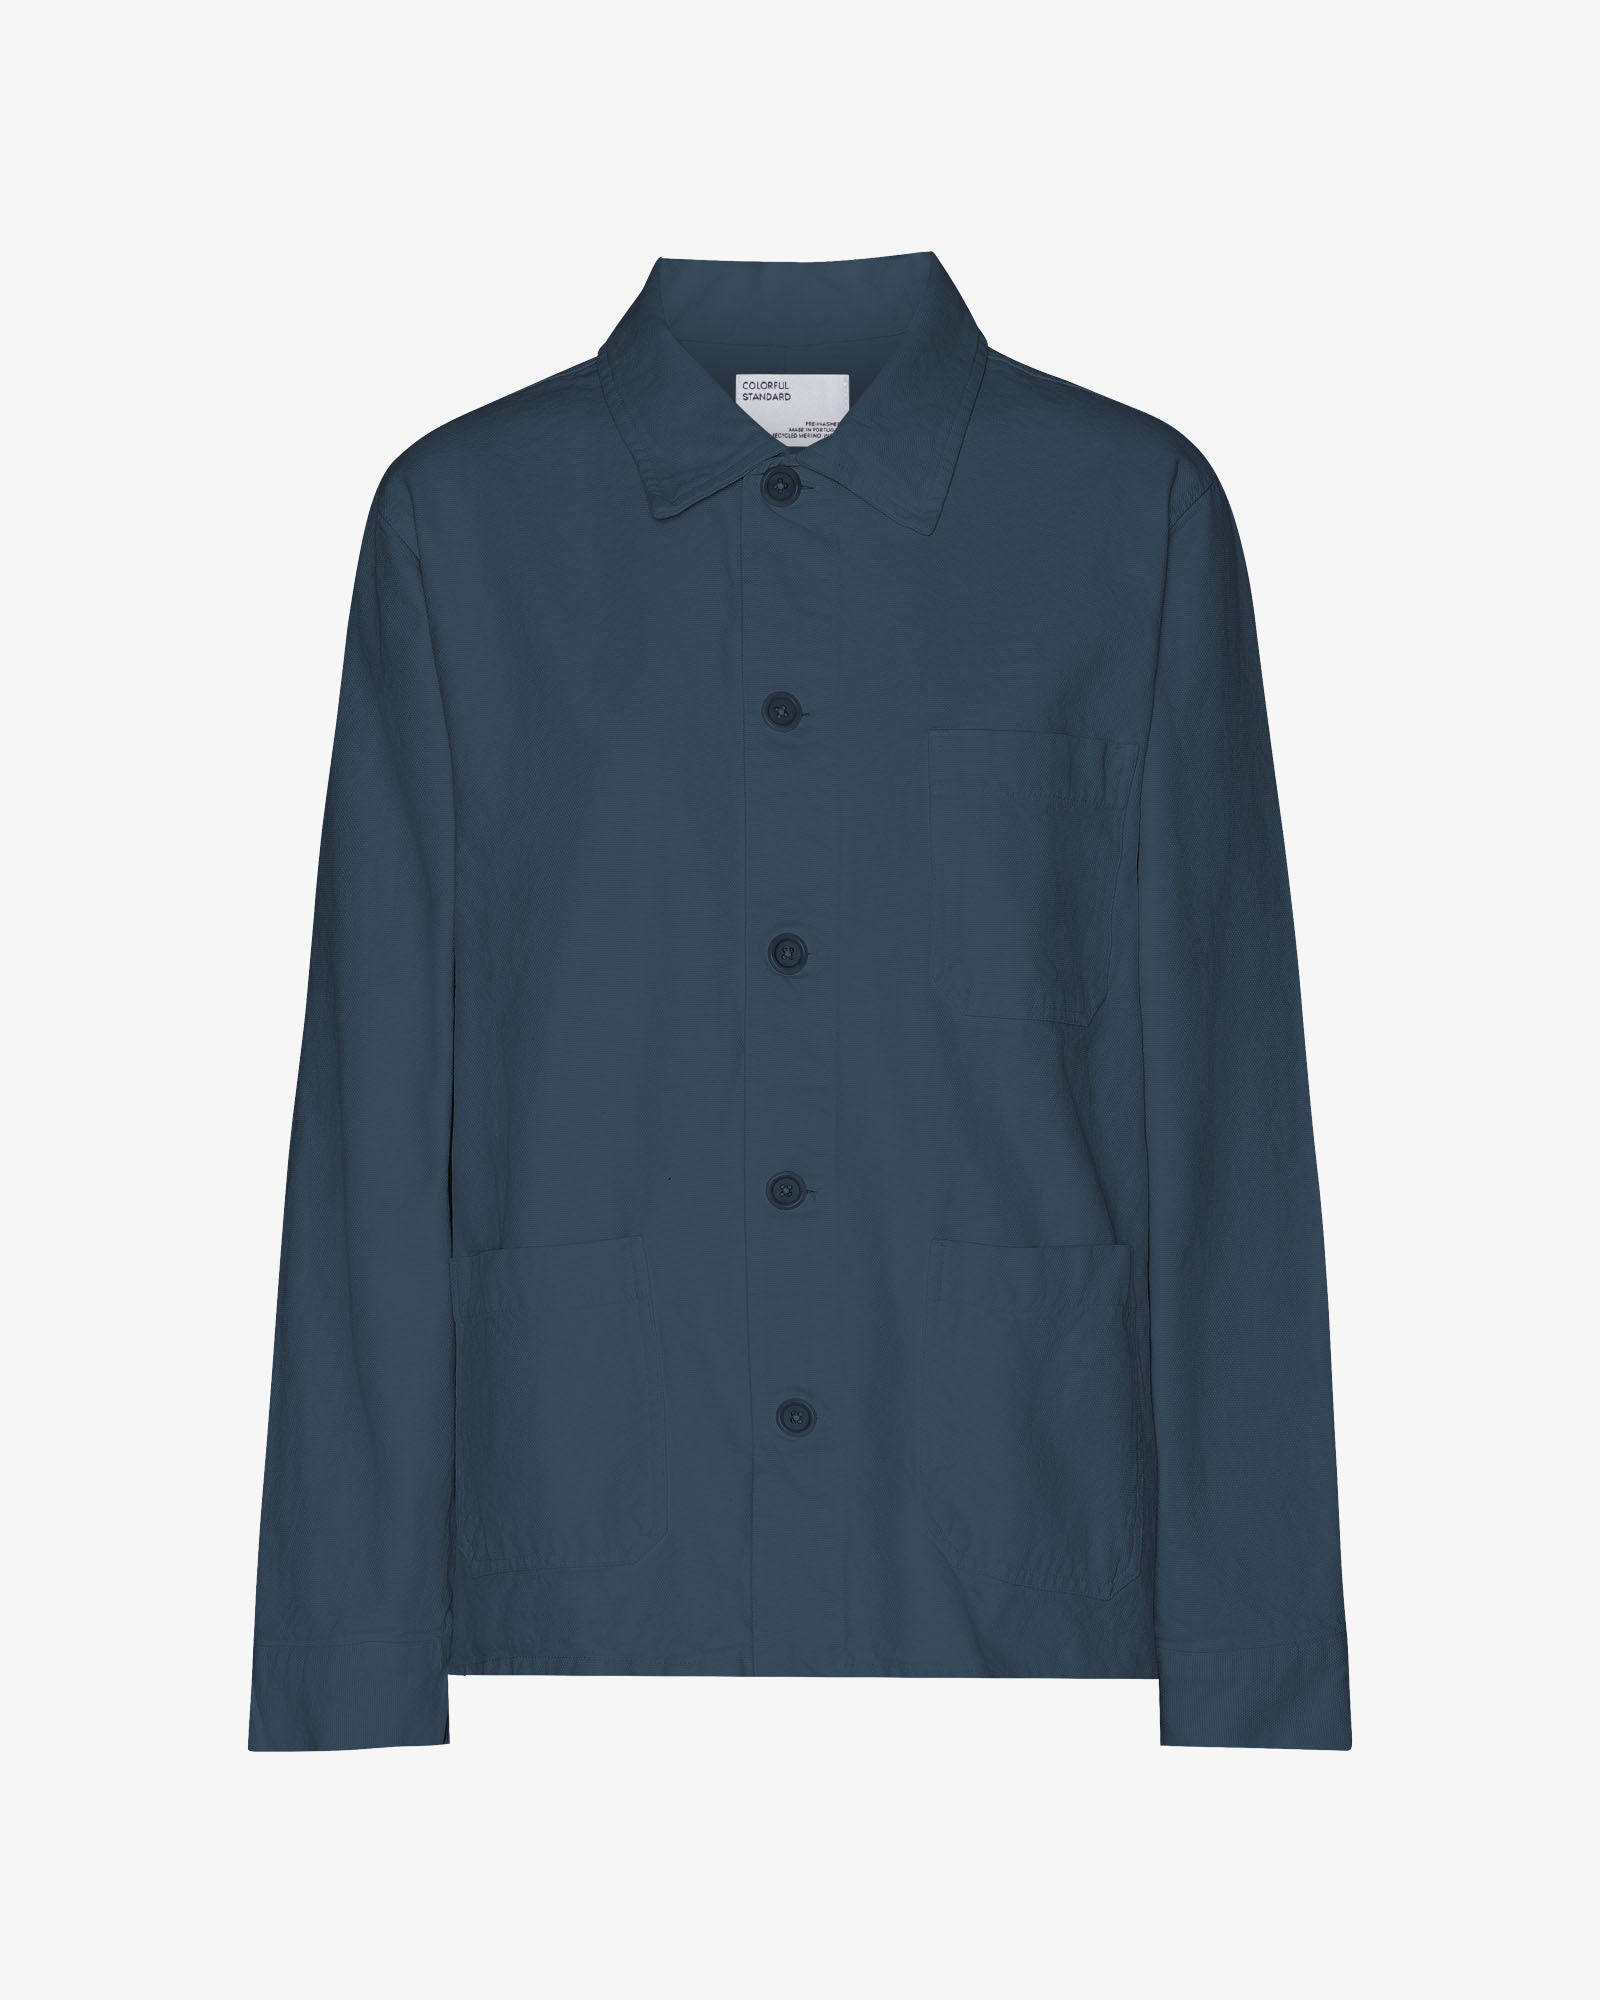 Organic Workwear Jacket - Petrol Blue